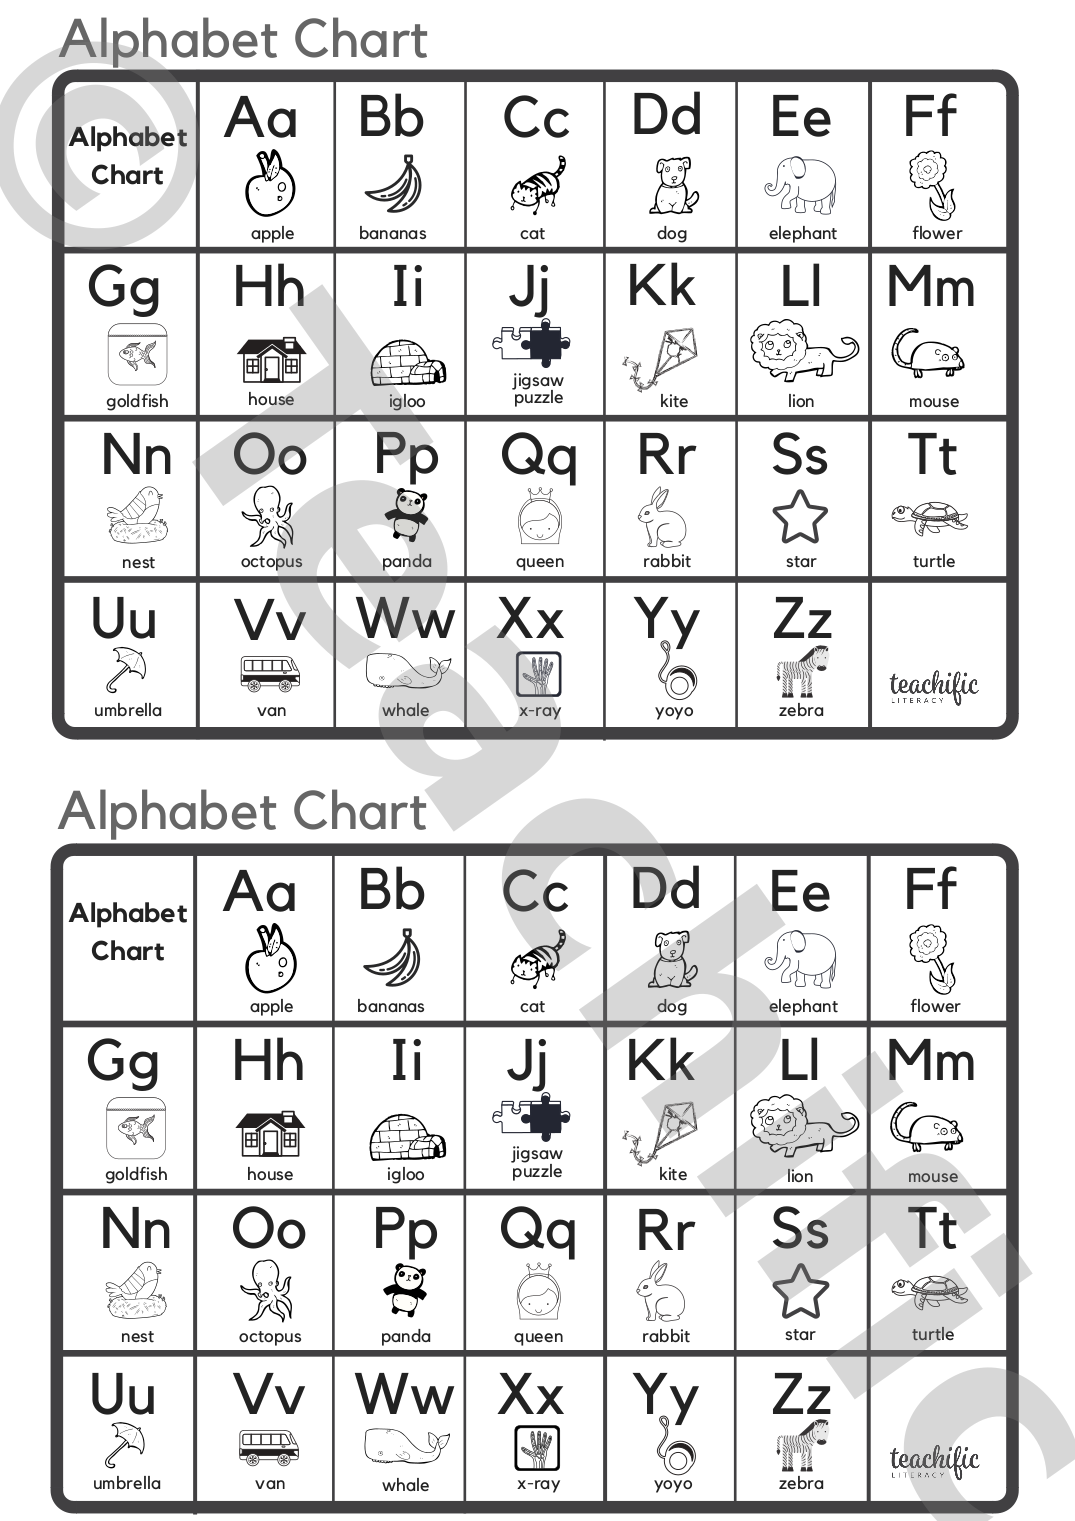 Alphabet Charts: Illustrated - Small | Teachific